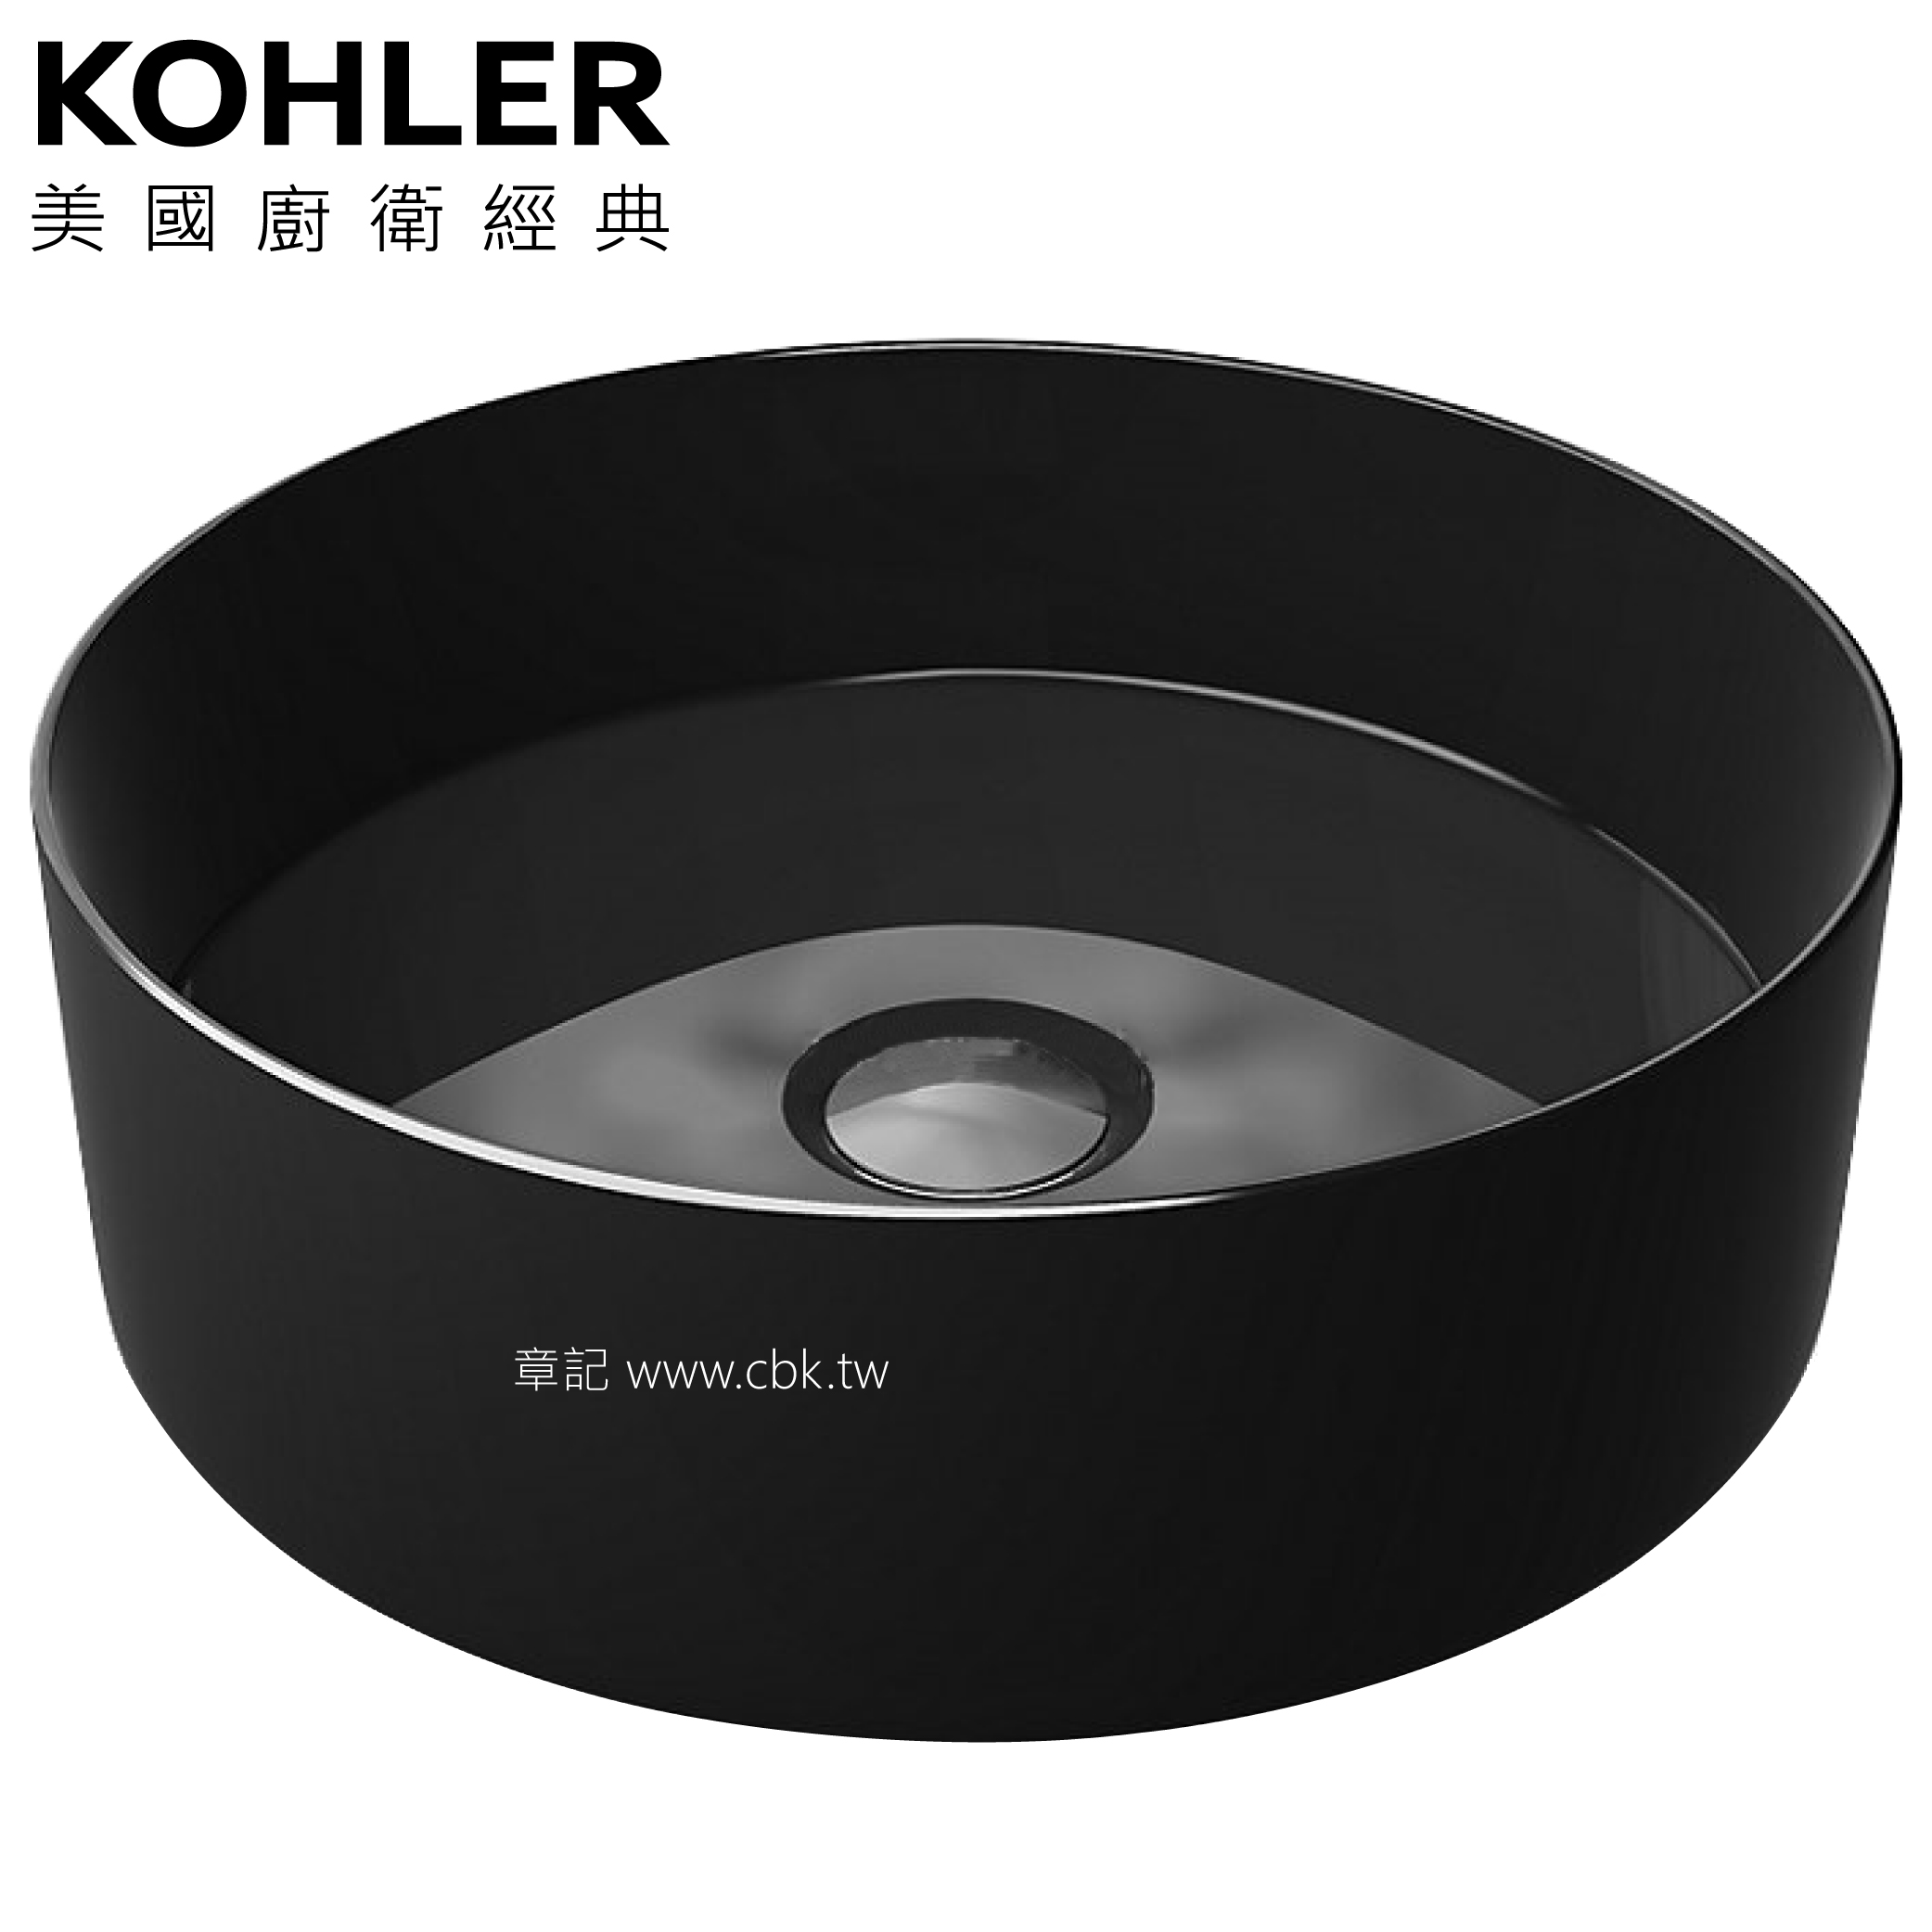 KOHLER Mica 檯面立體盆-亮黑(41cm) K-90012T-7  |面盆 . 浴櫃|檯面盆